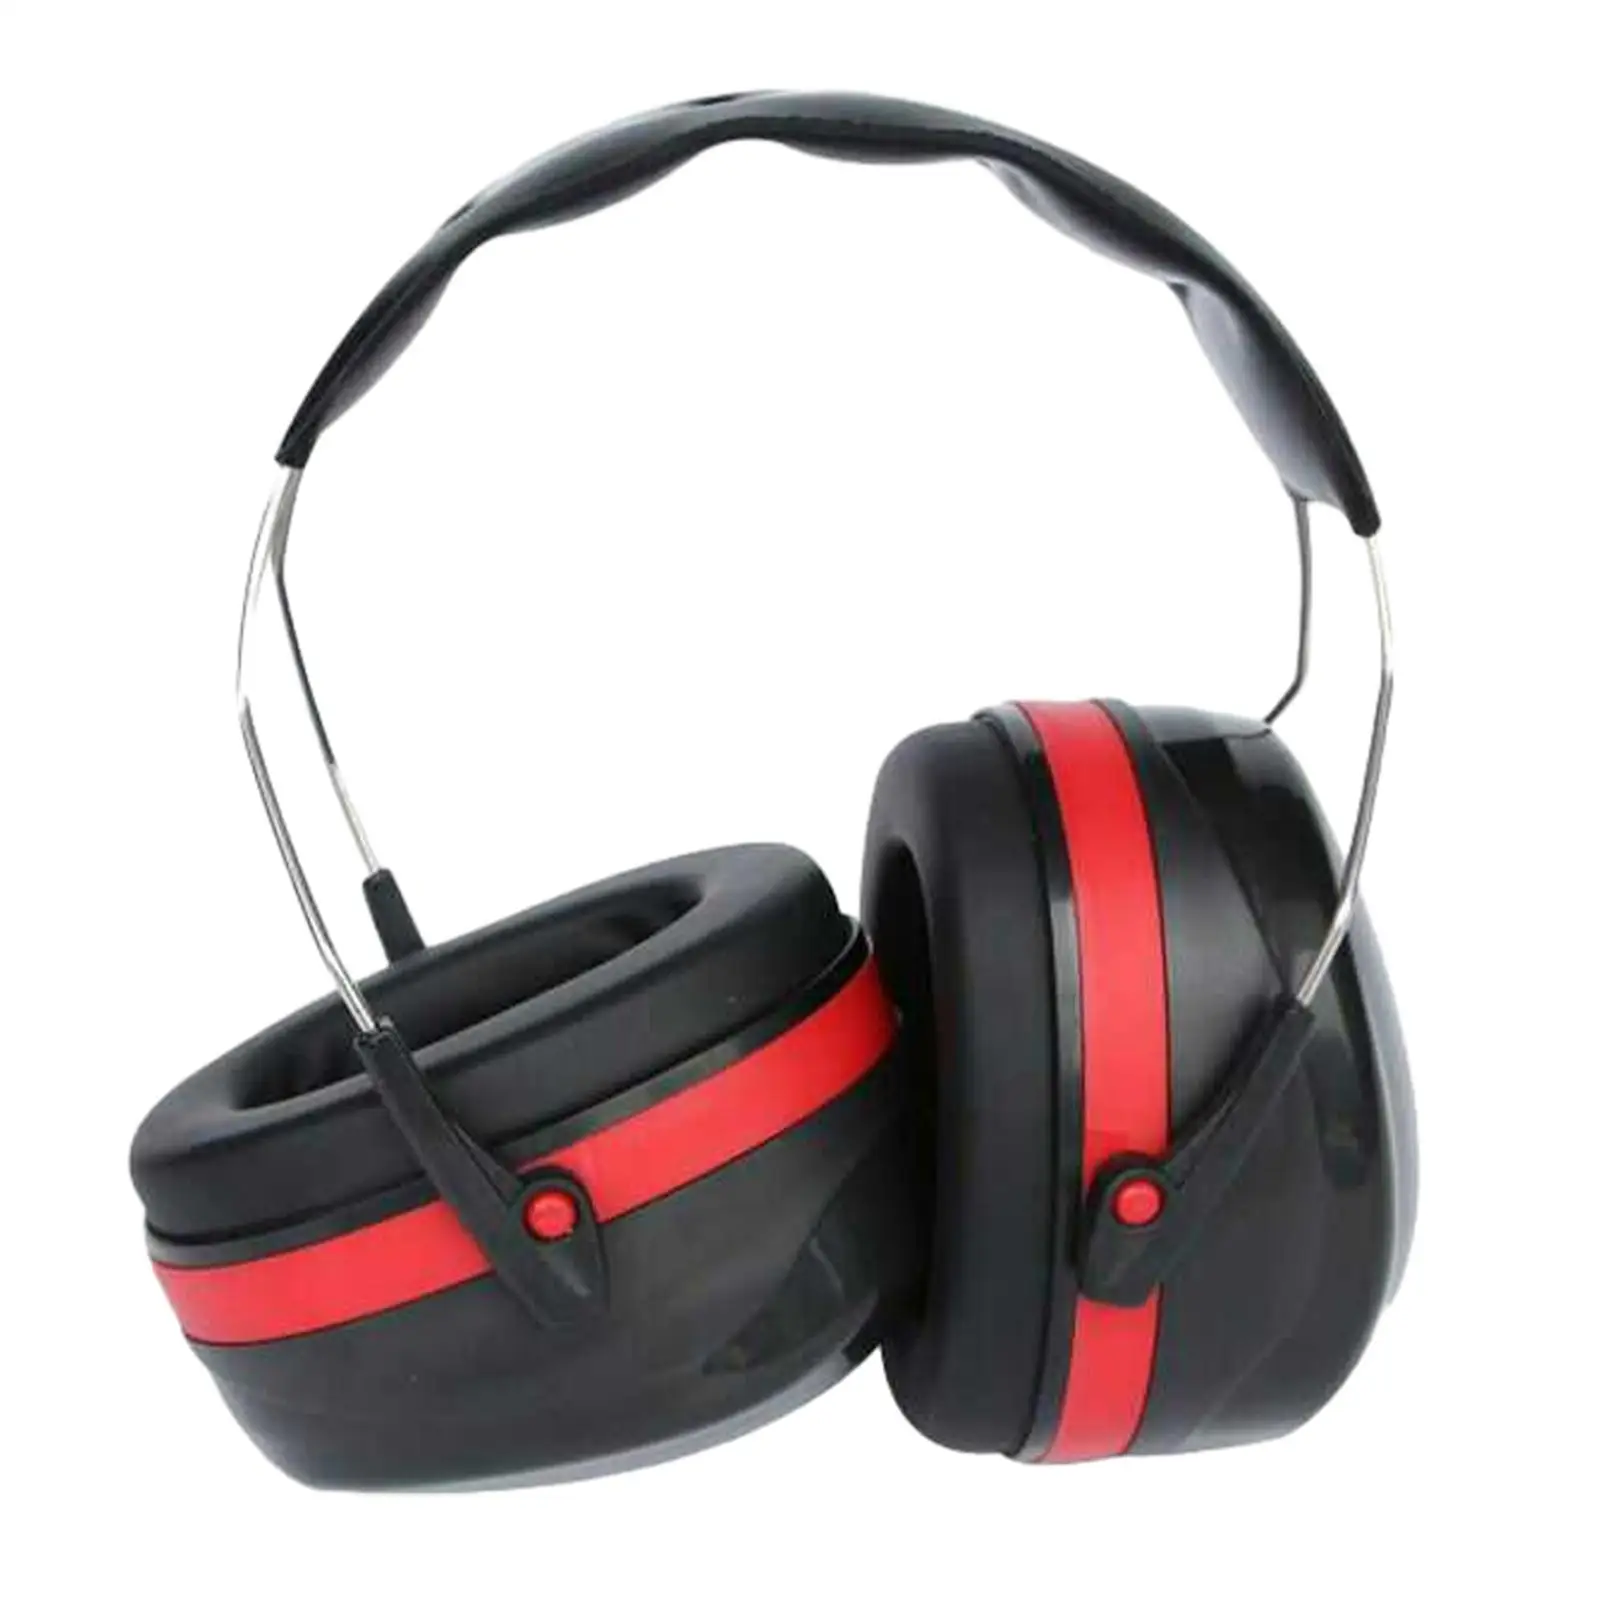 Noise Reduction Headphones Foldable Sponge Ear Pad Soundproof Comfortable for House Decorating Sleeping Workshop Study Concerts